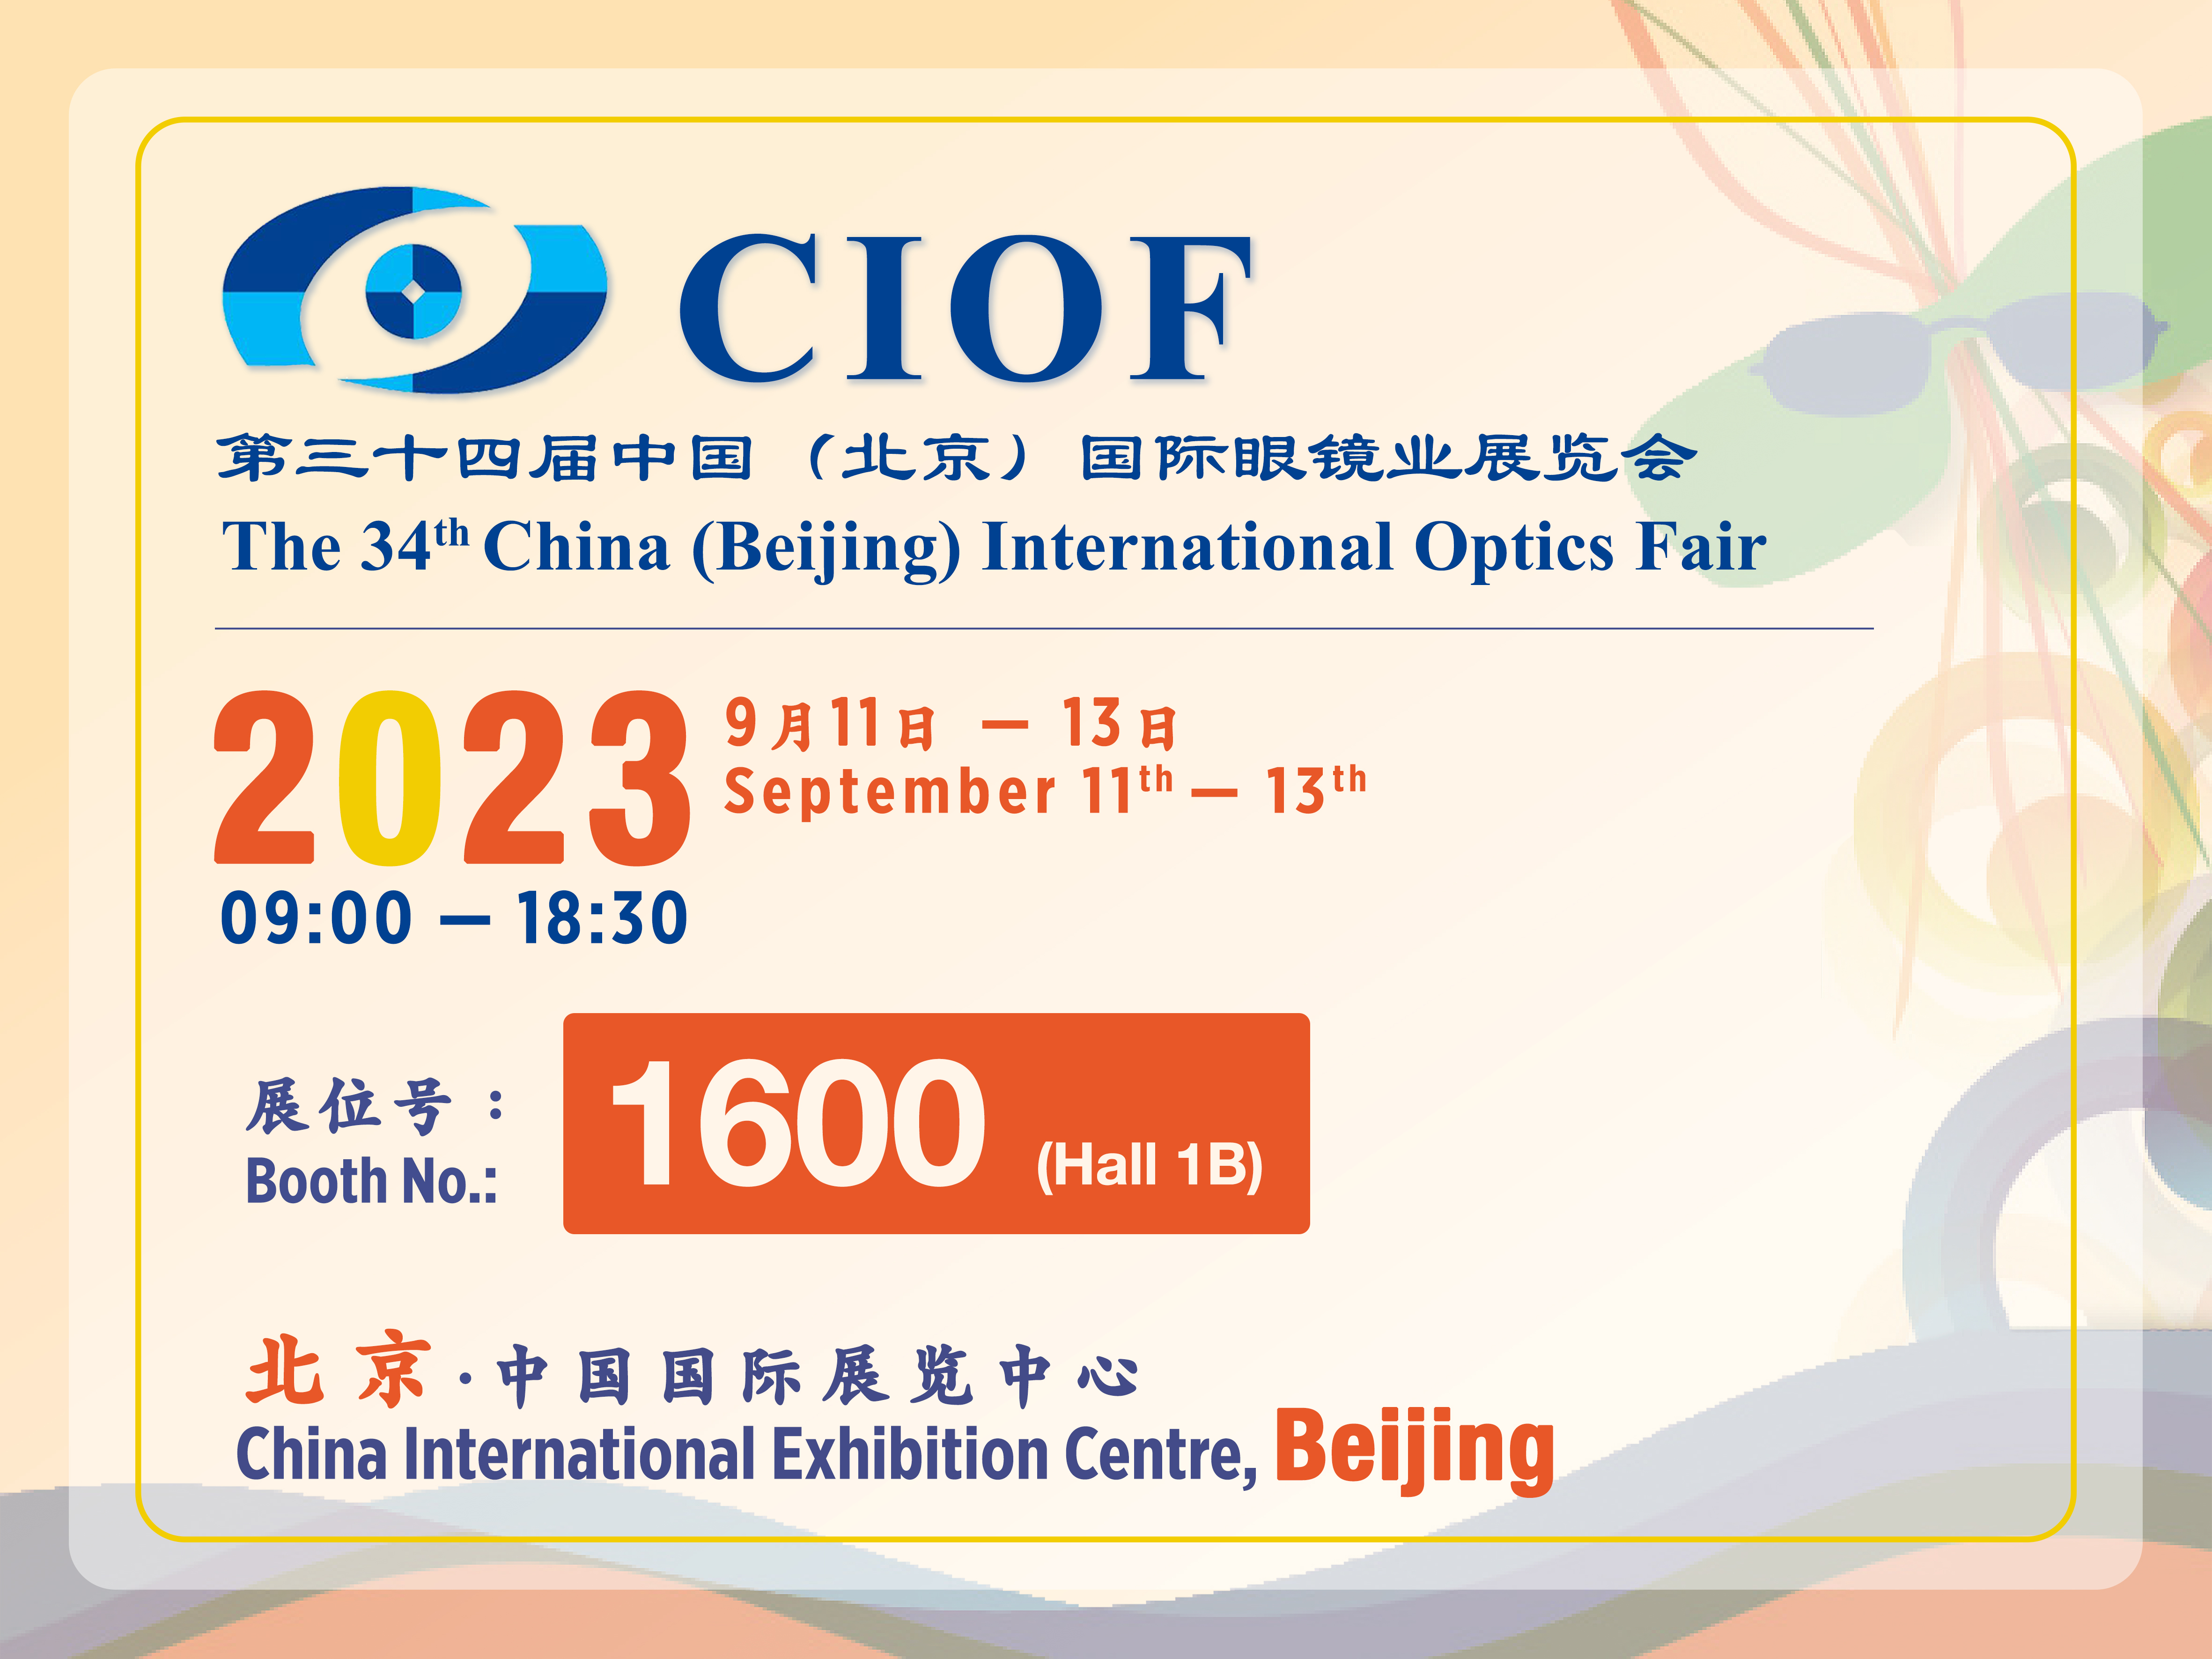 The 34th China (Beijing) International Optics Fair 2023